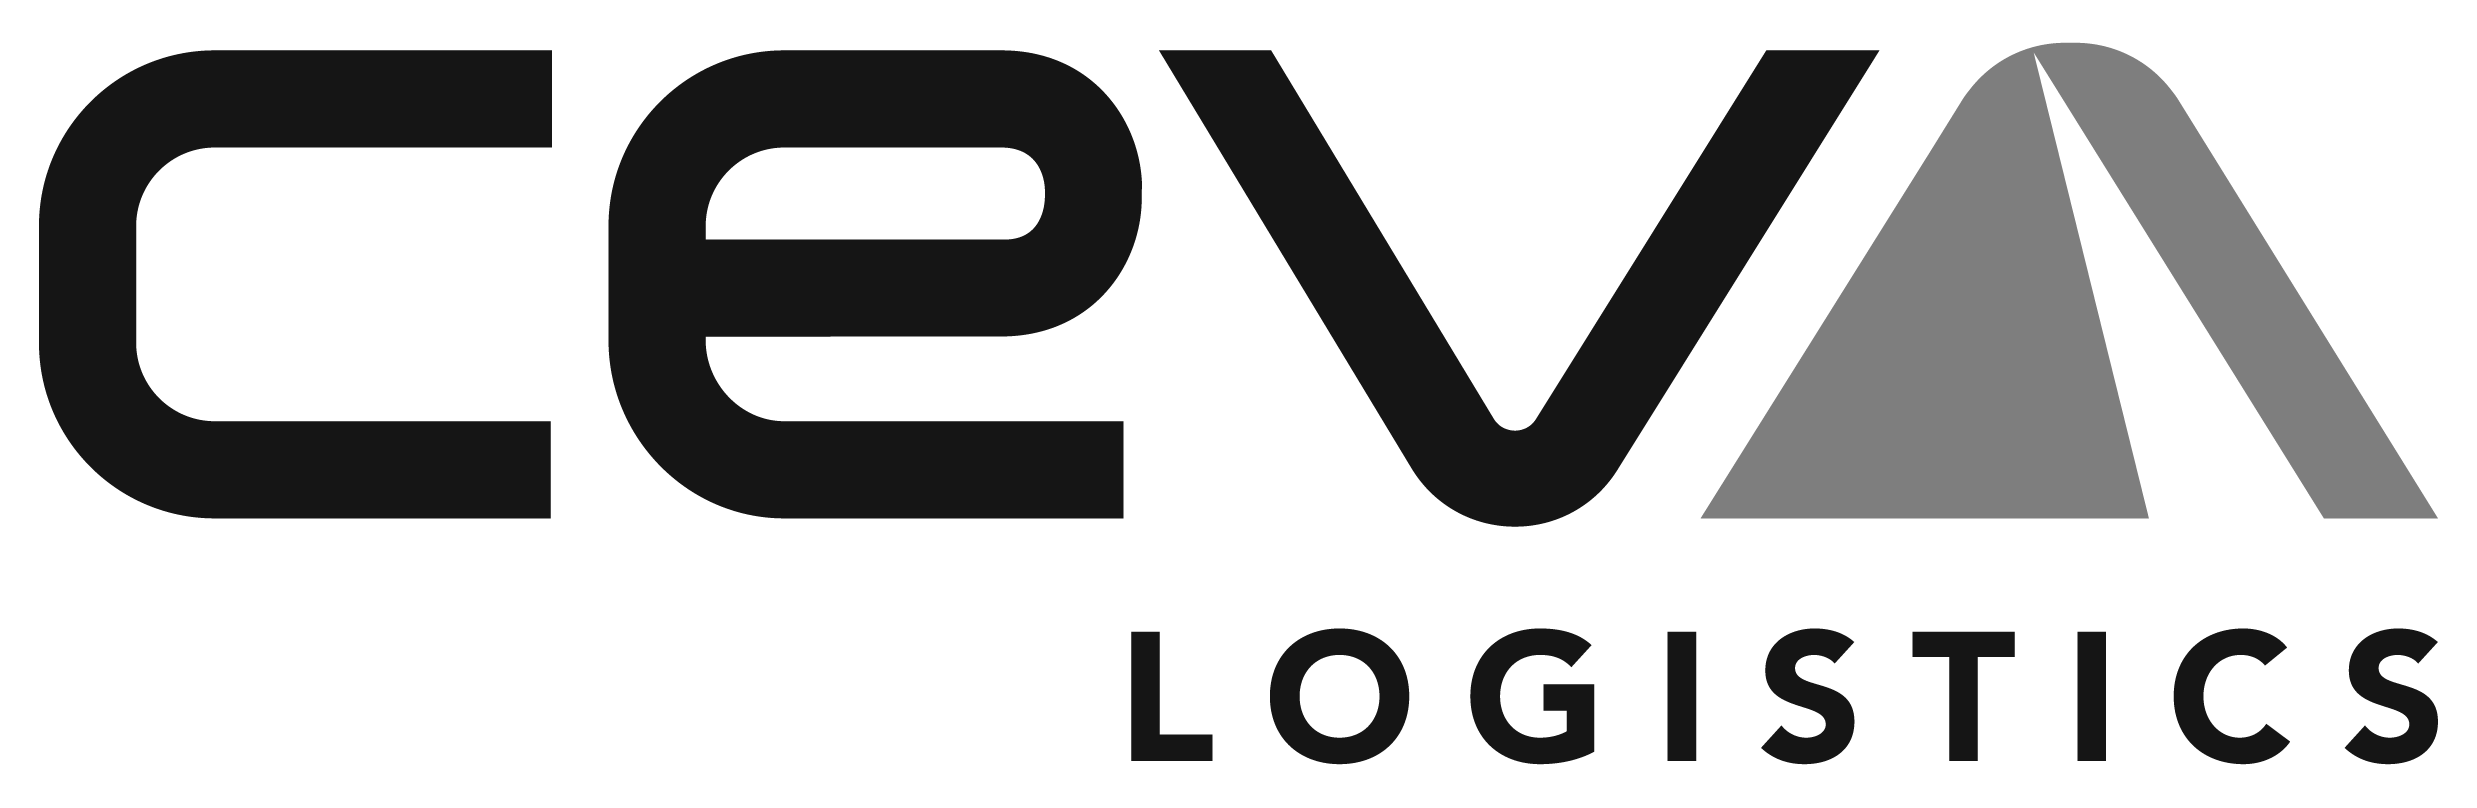 monochromatic ceva logistics logo